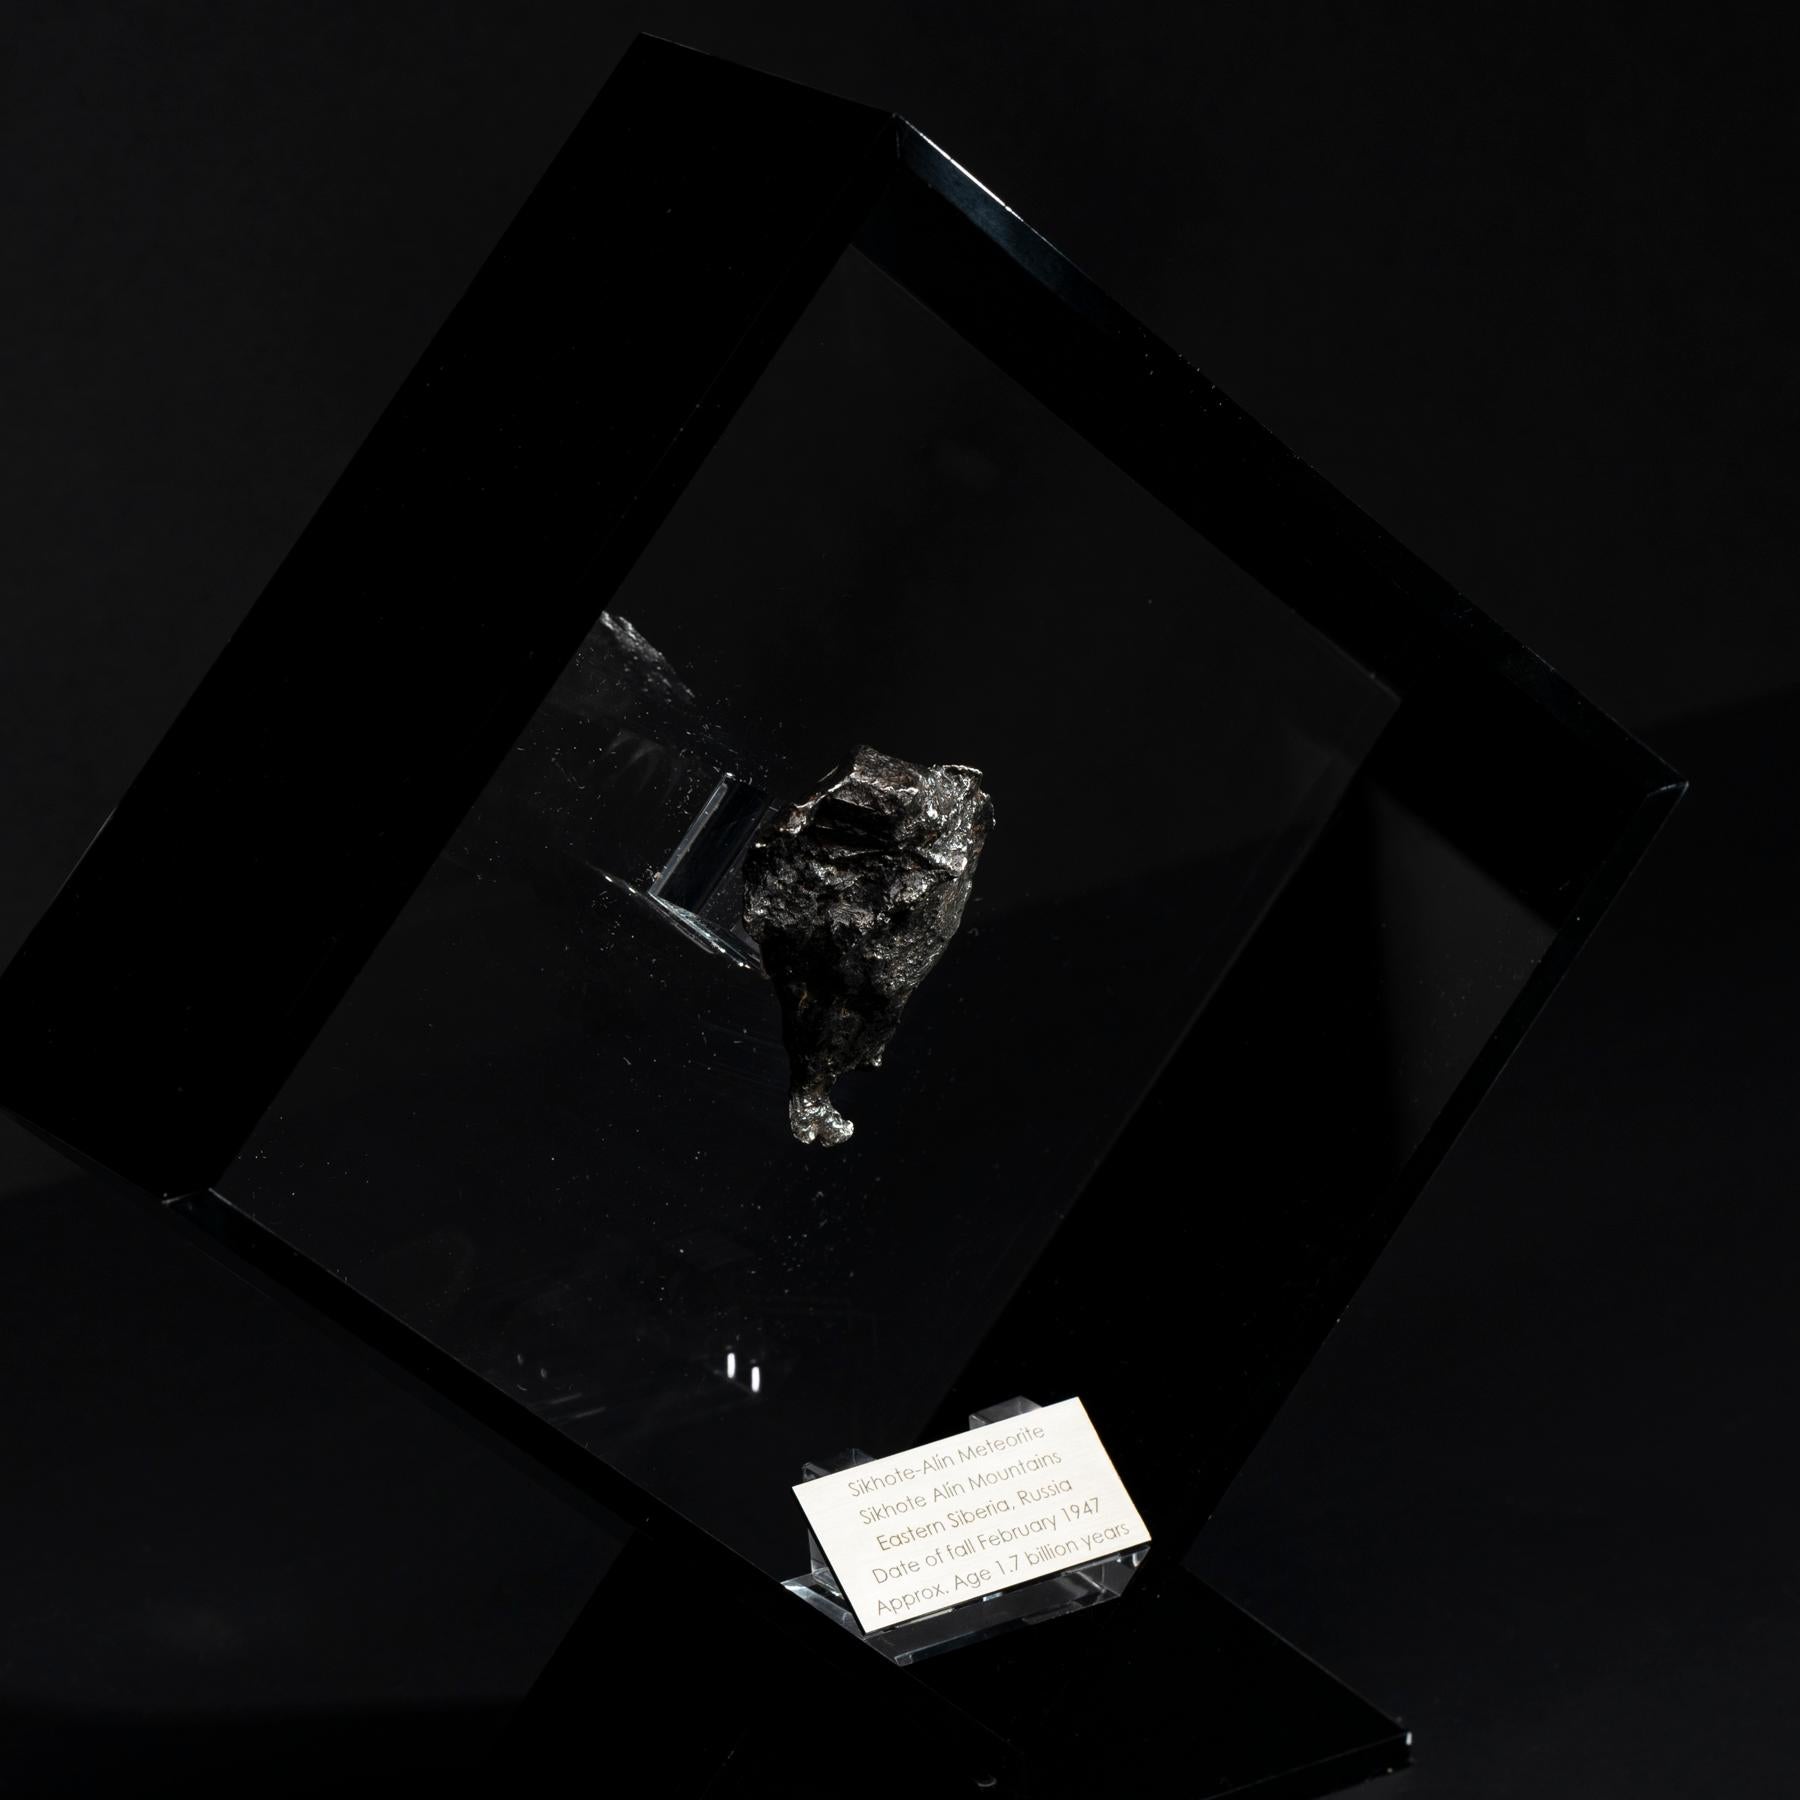 Sikhote Alin Meteorite de Sibérie, Russie, exposé sur mesure en acrylique Neuf - En vente à Polanco, CDMX